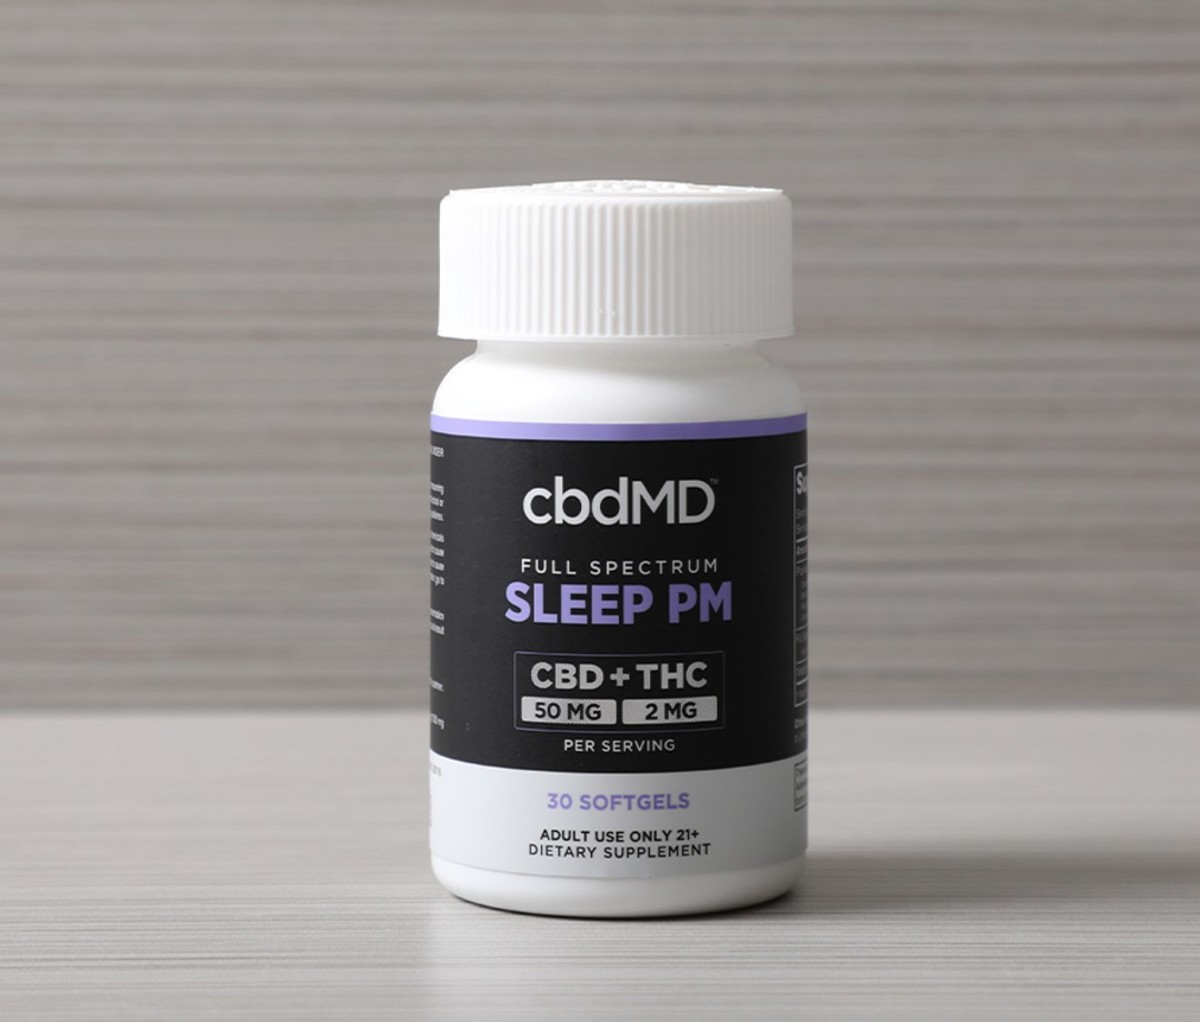 cbdMD softgels for sleep